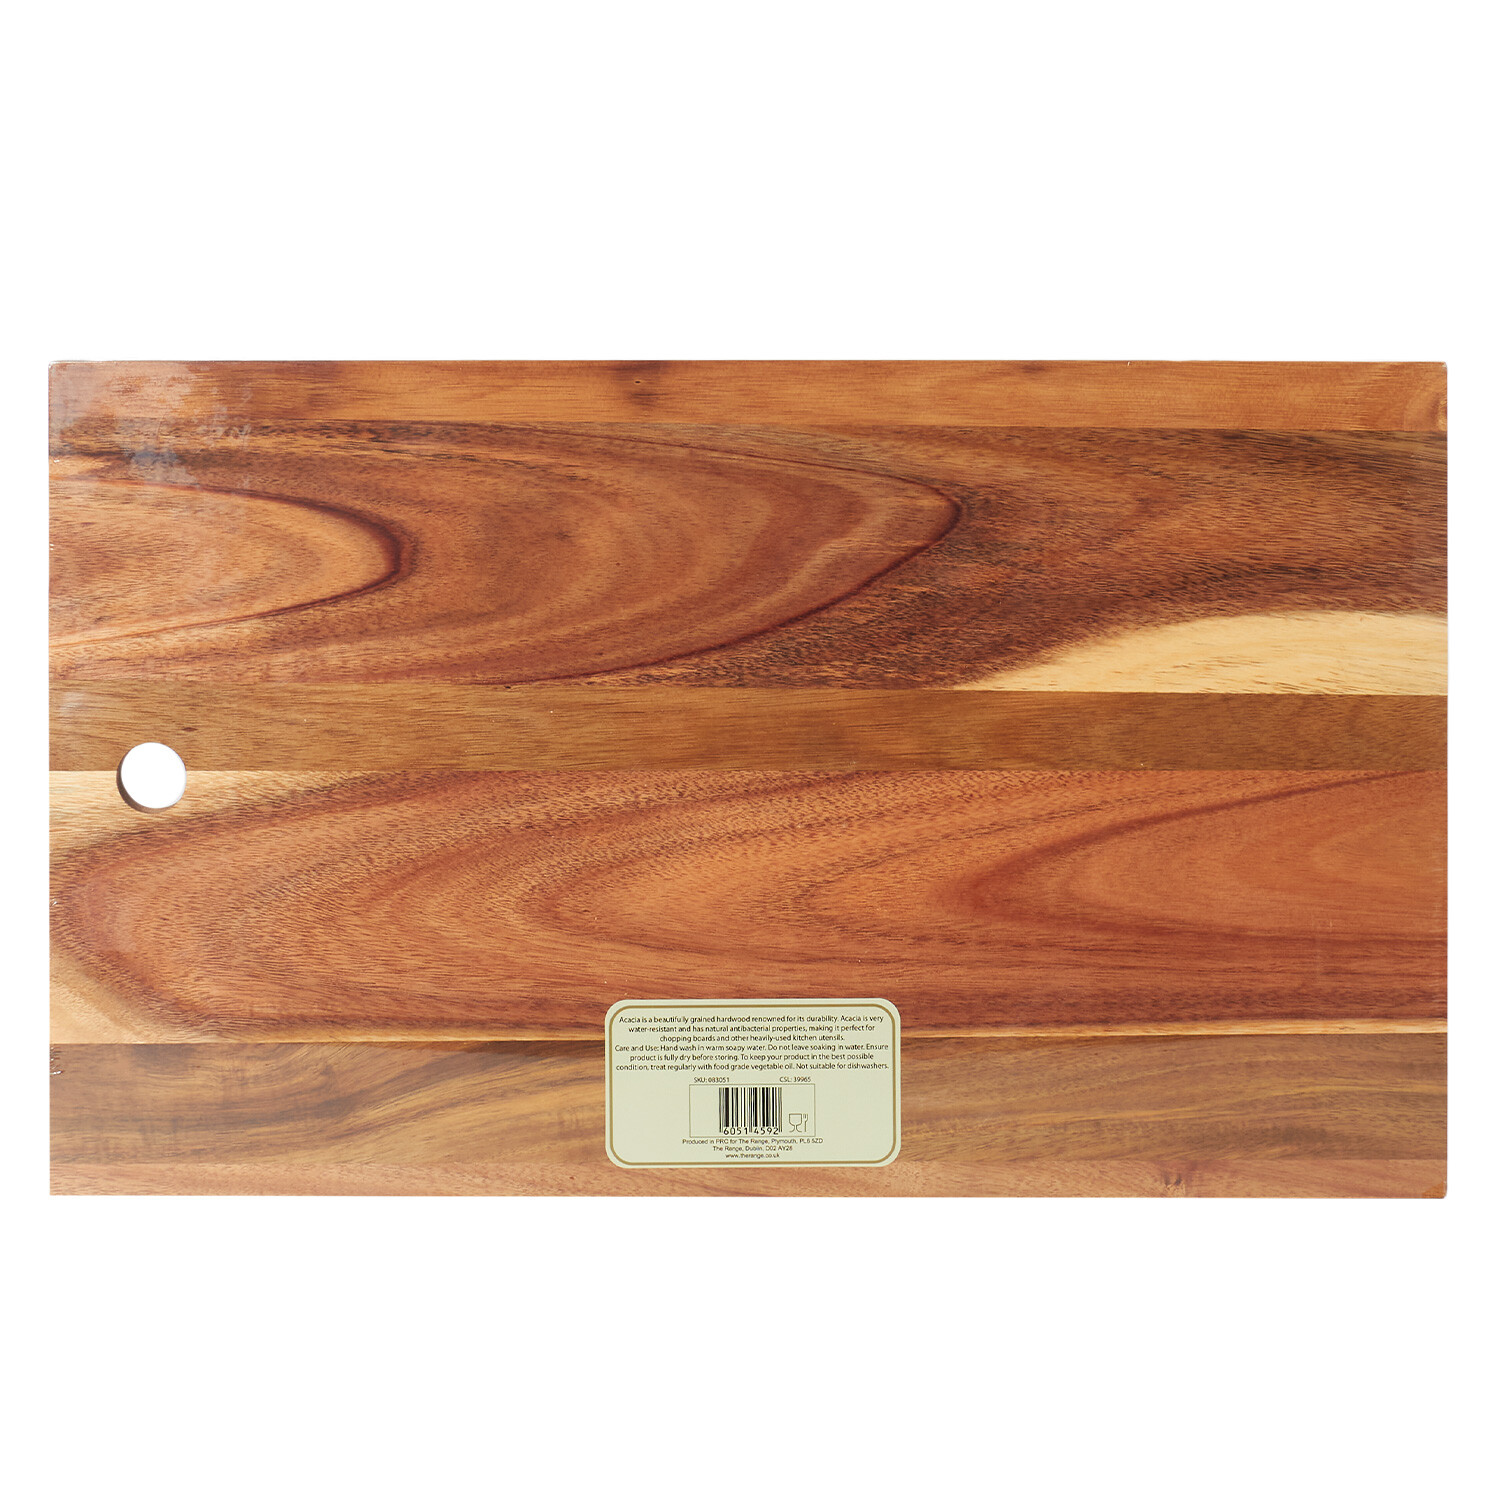 Acacia Contemporary Chop and Serve Board - Brown Image 2